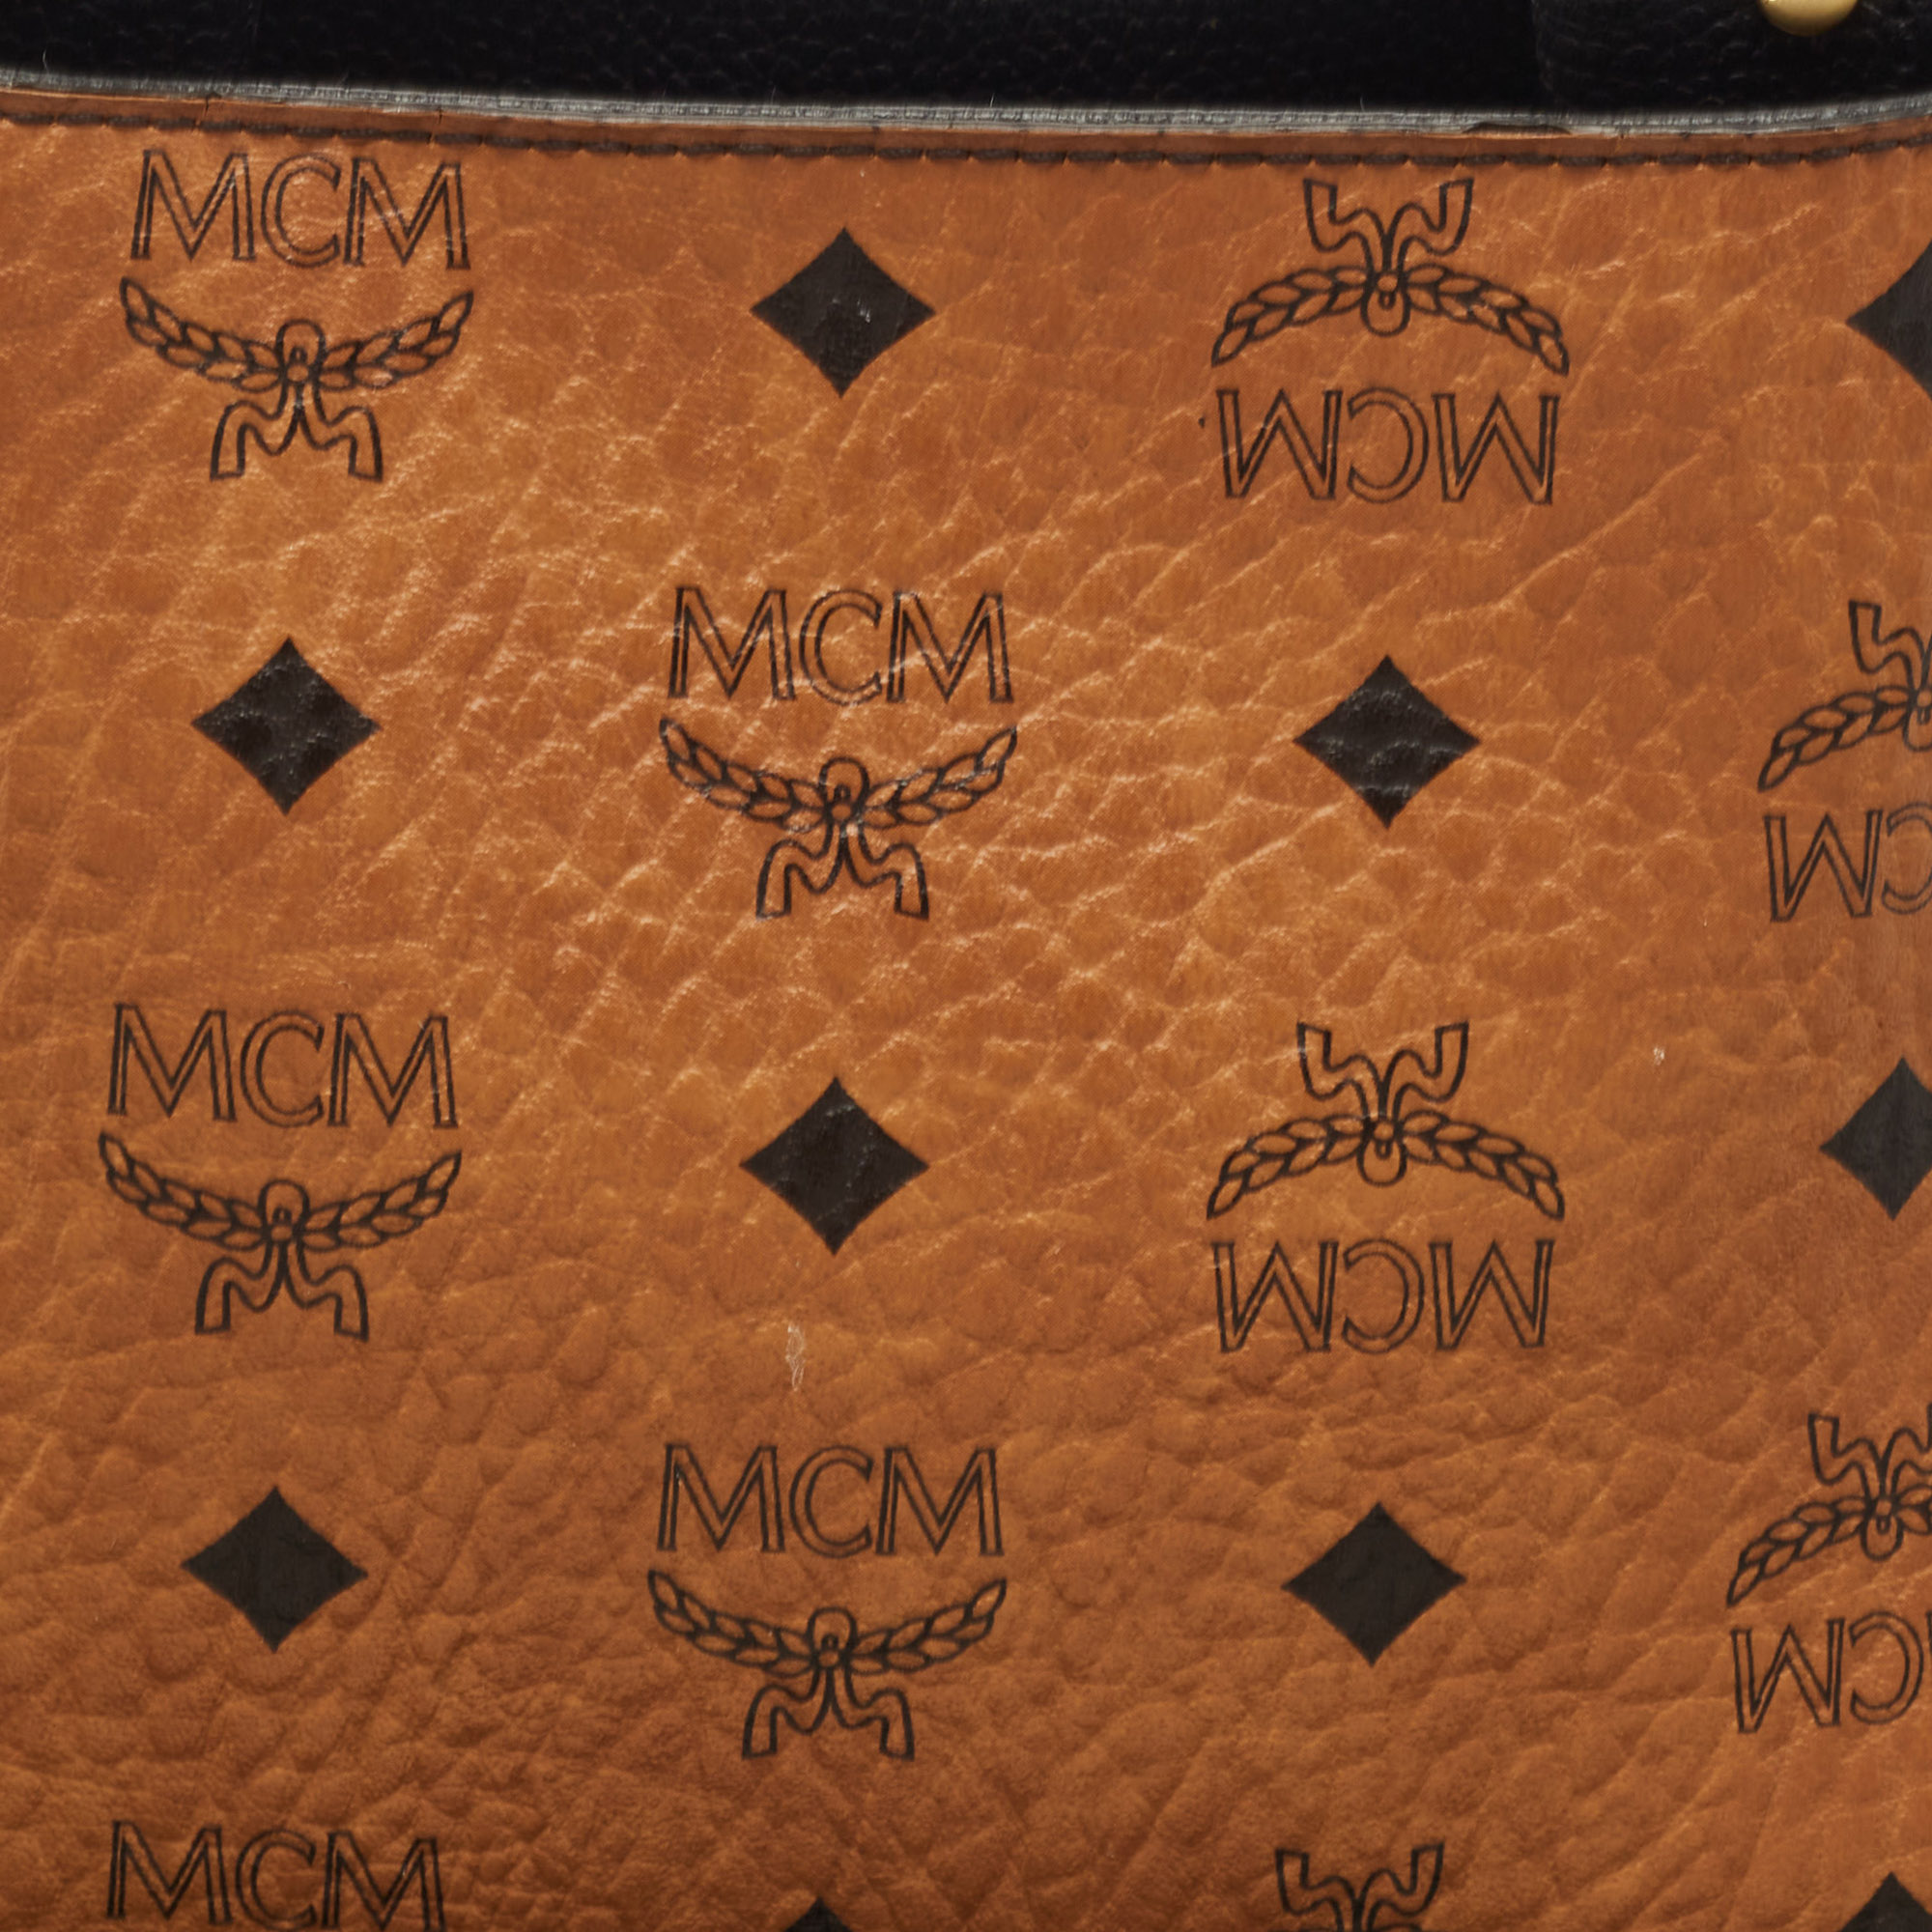 MCM Black/Cognac Visetos Leather Mini Corina Top Handle Bag